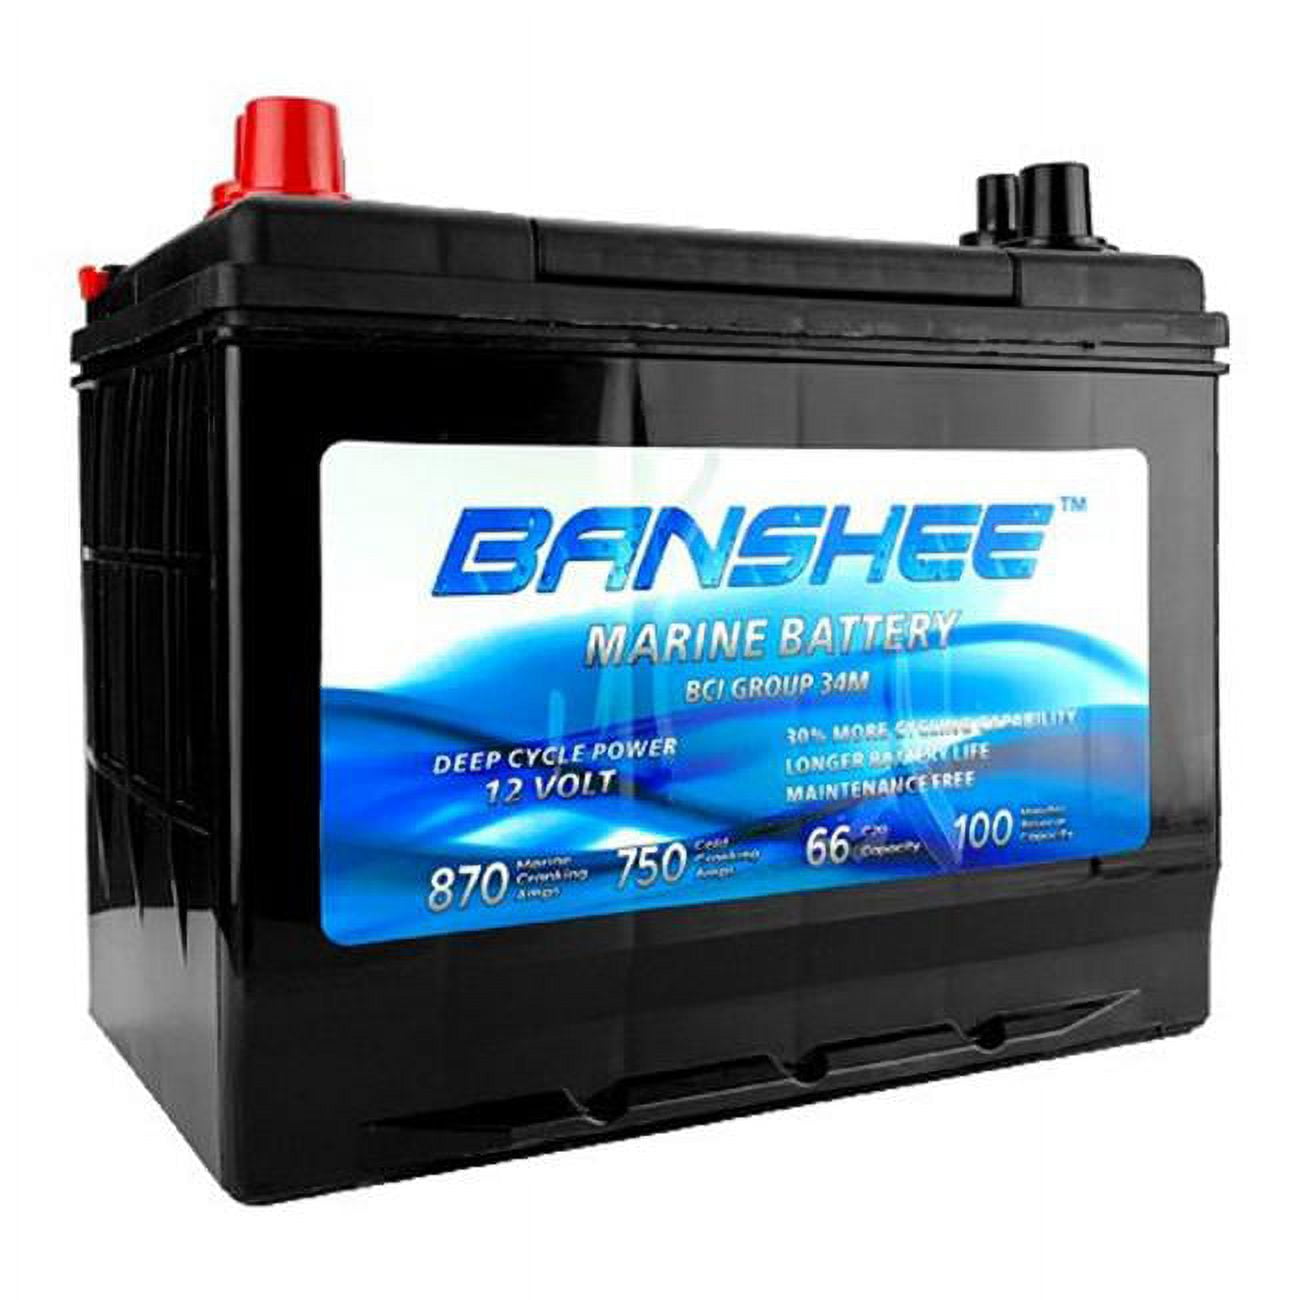 Picture of Banshee 34M-Banshee-ARR-SHIP Deep Cycle Battery for Replacement Optima SC34DM 8016-103 D34M Bluetop - Group Size 34